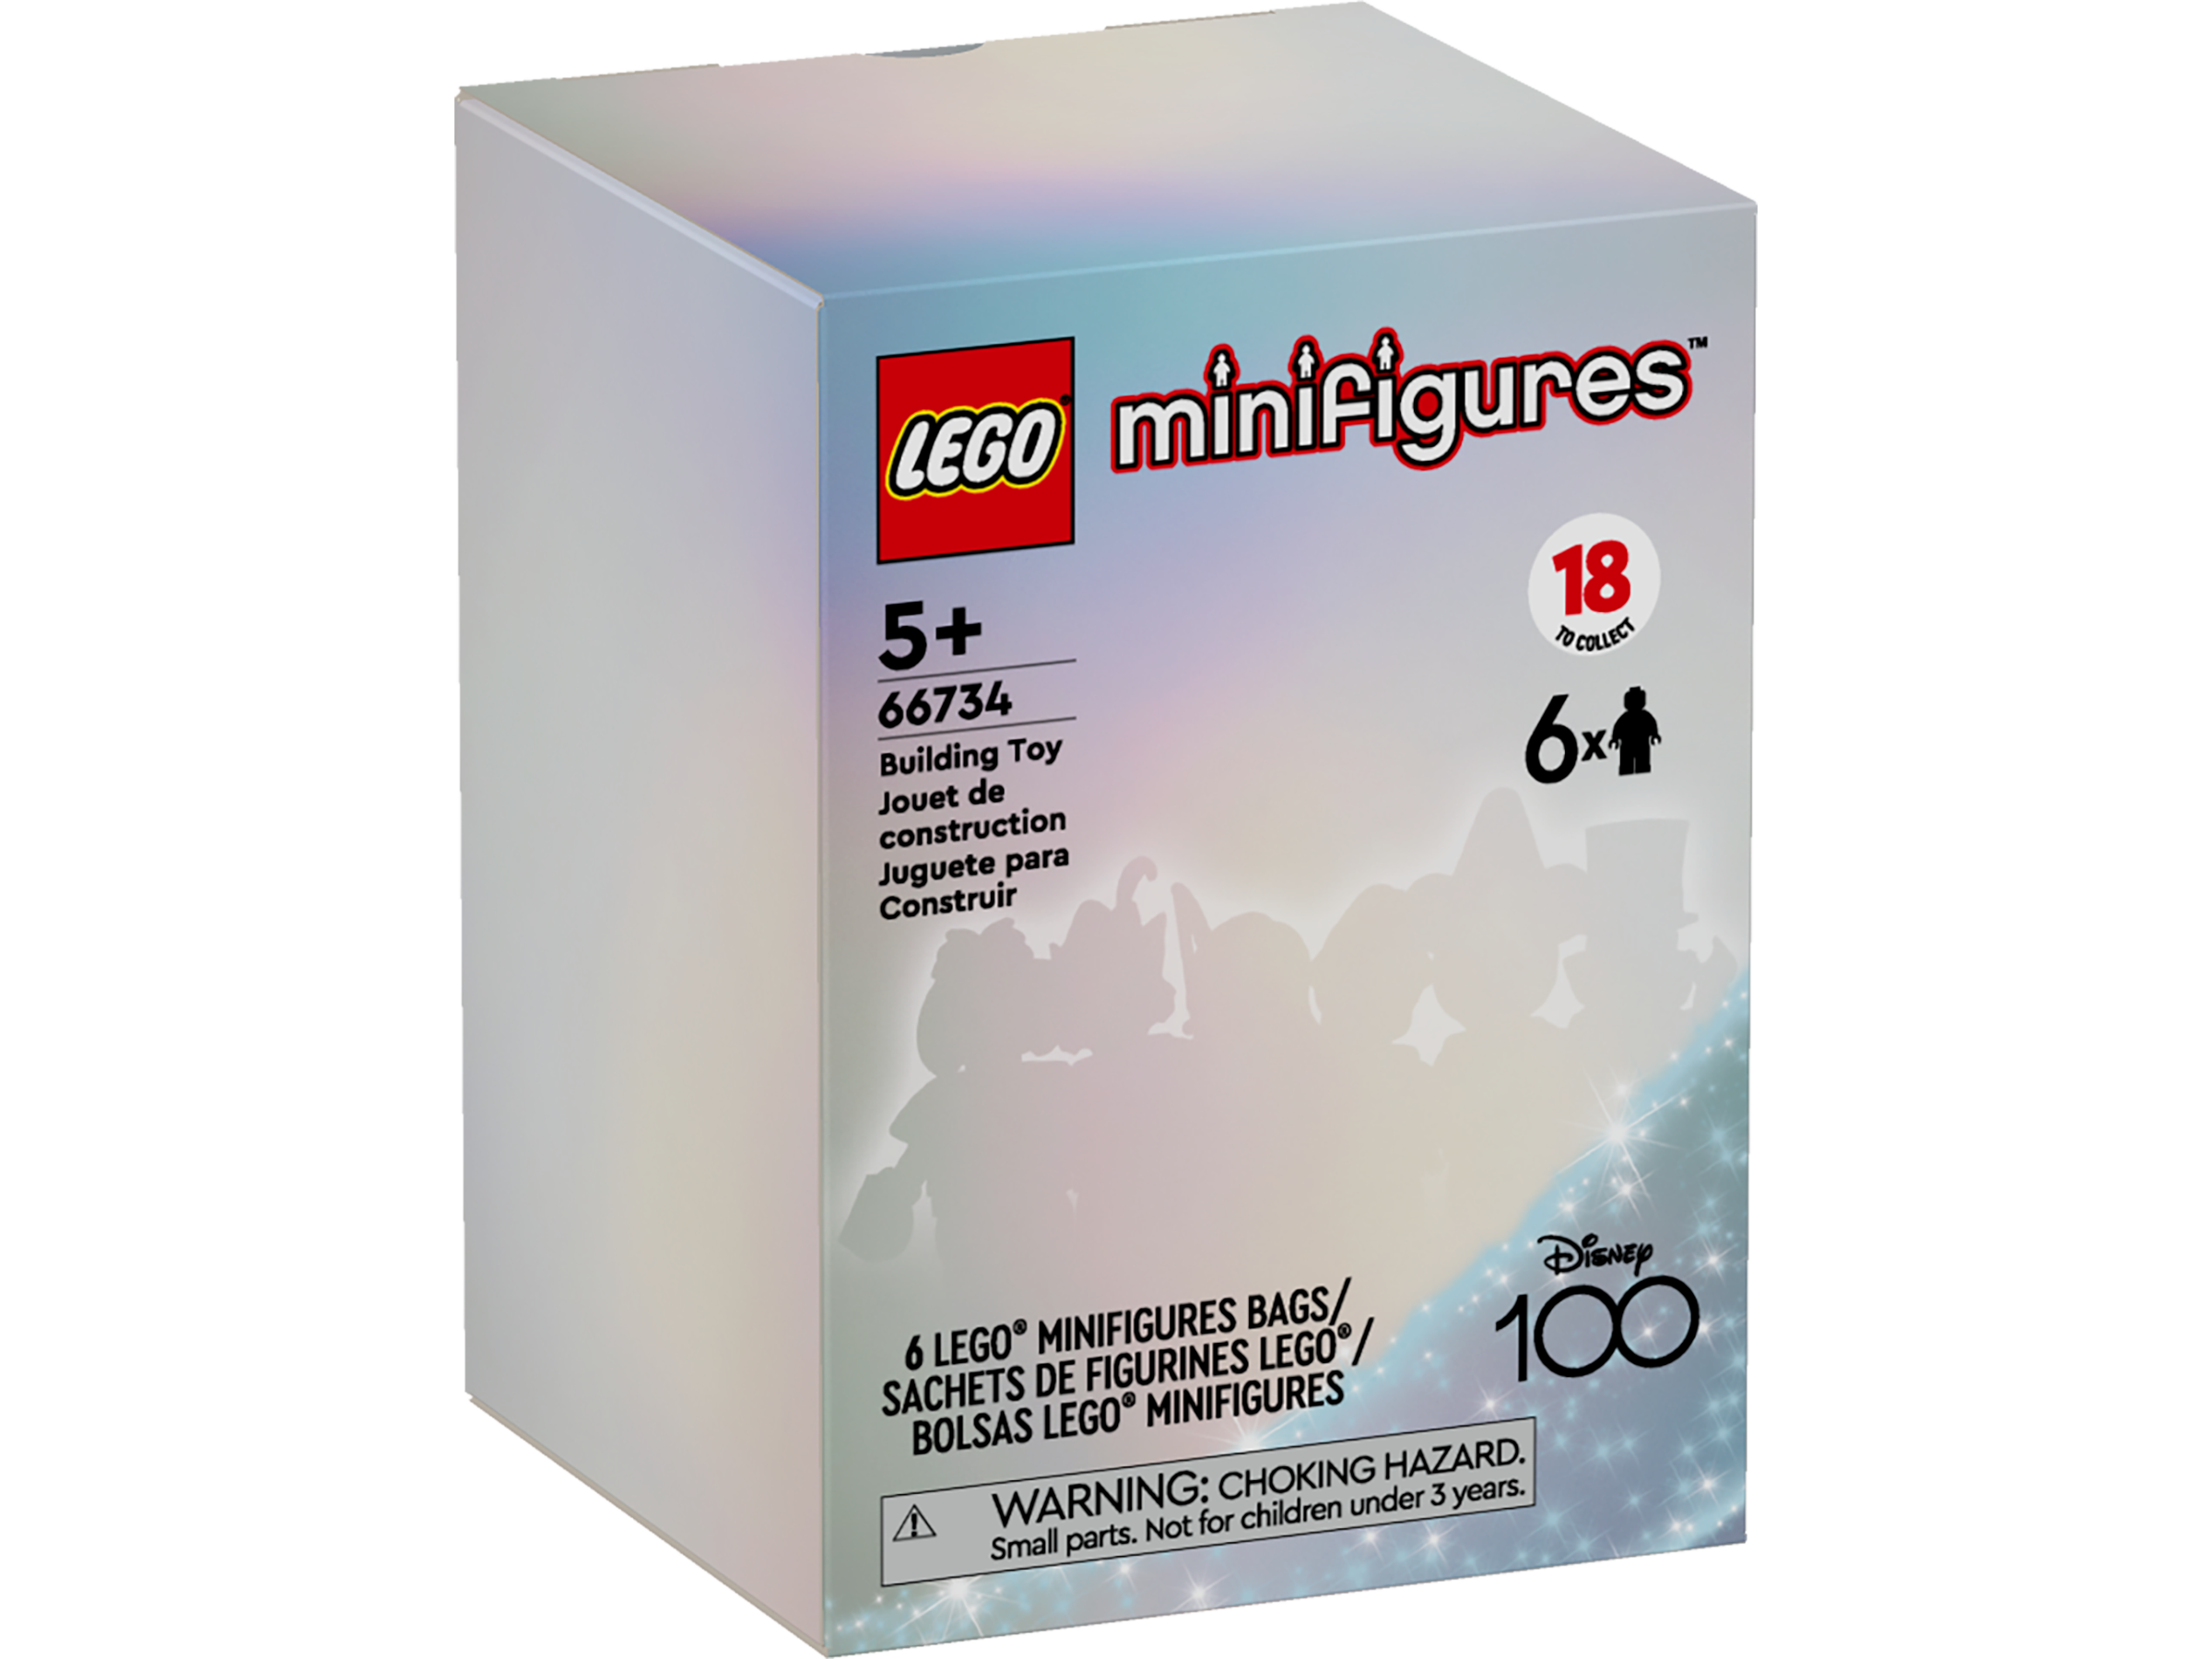 Minifigures Disney 100 6 Pack 66734, Minifigures